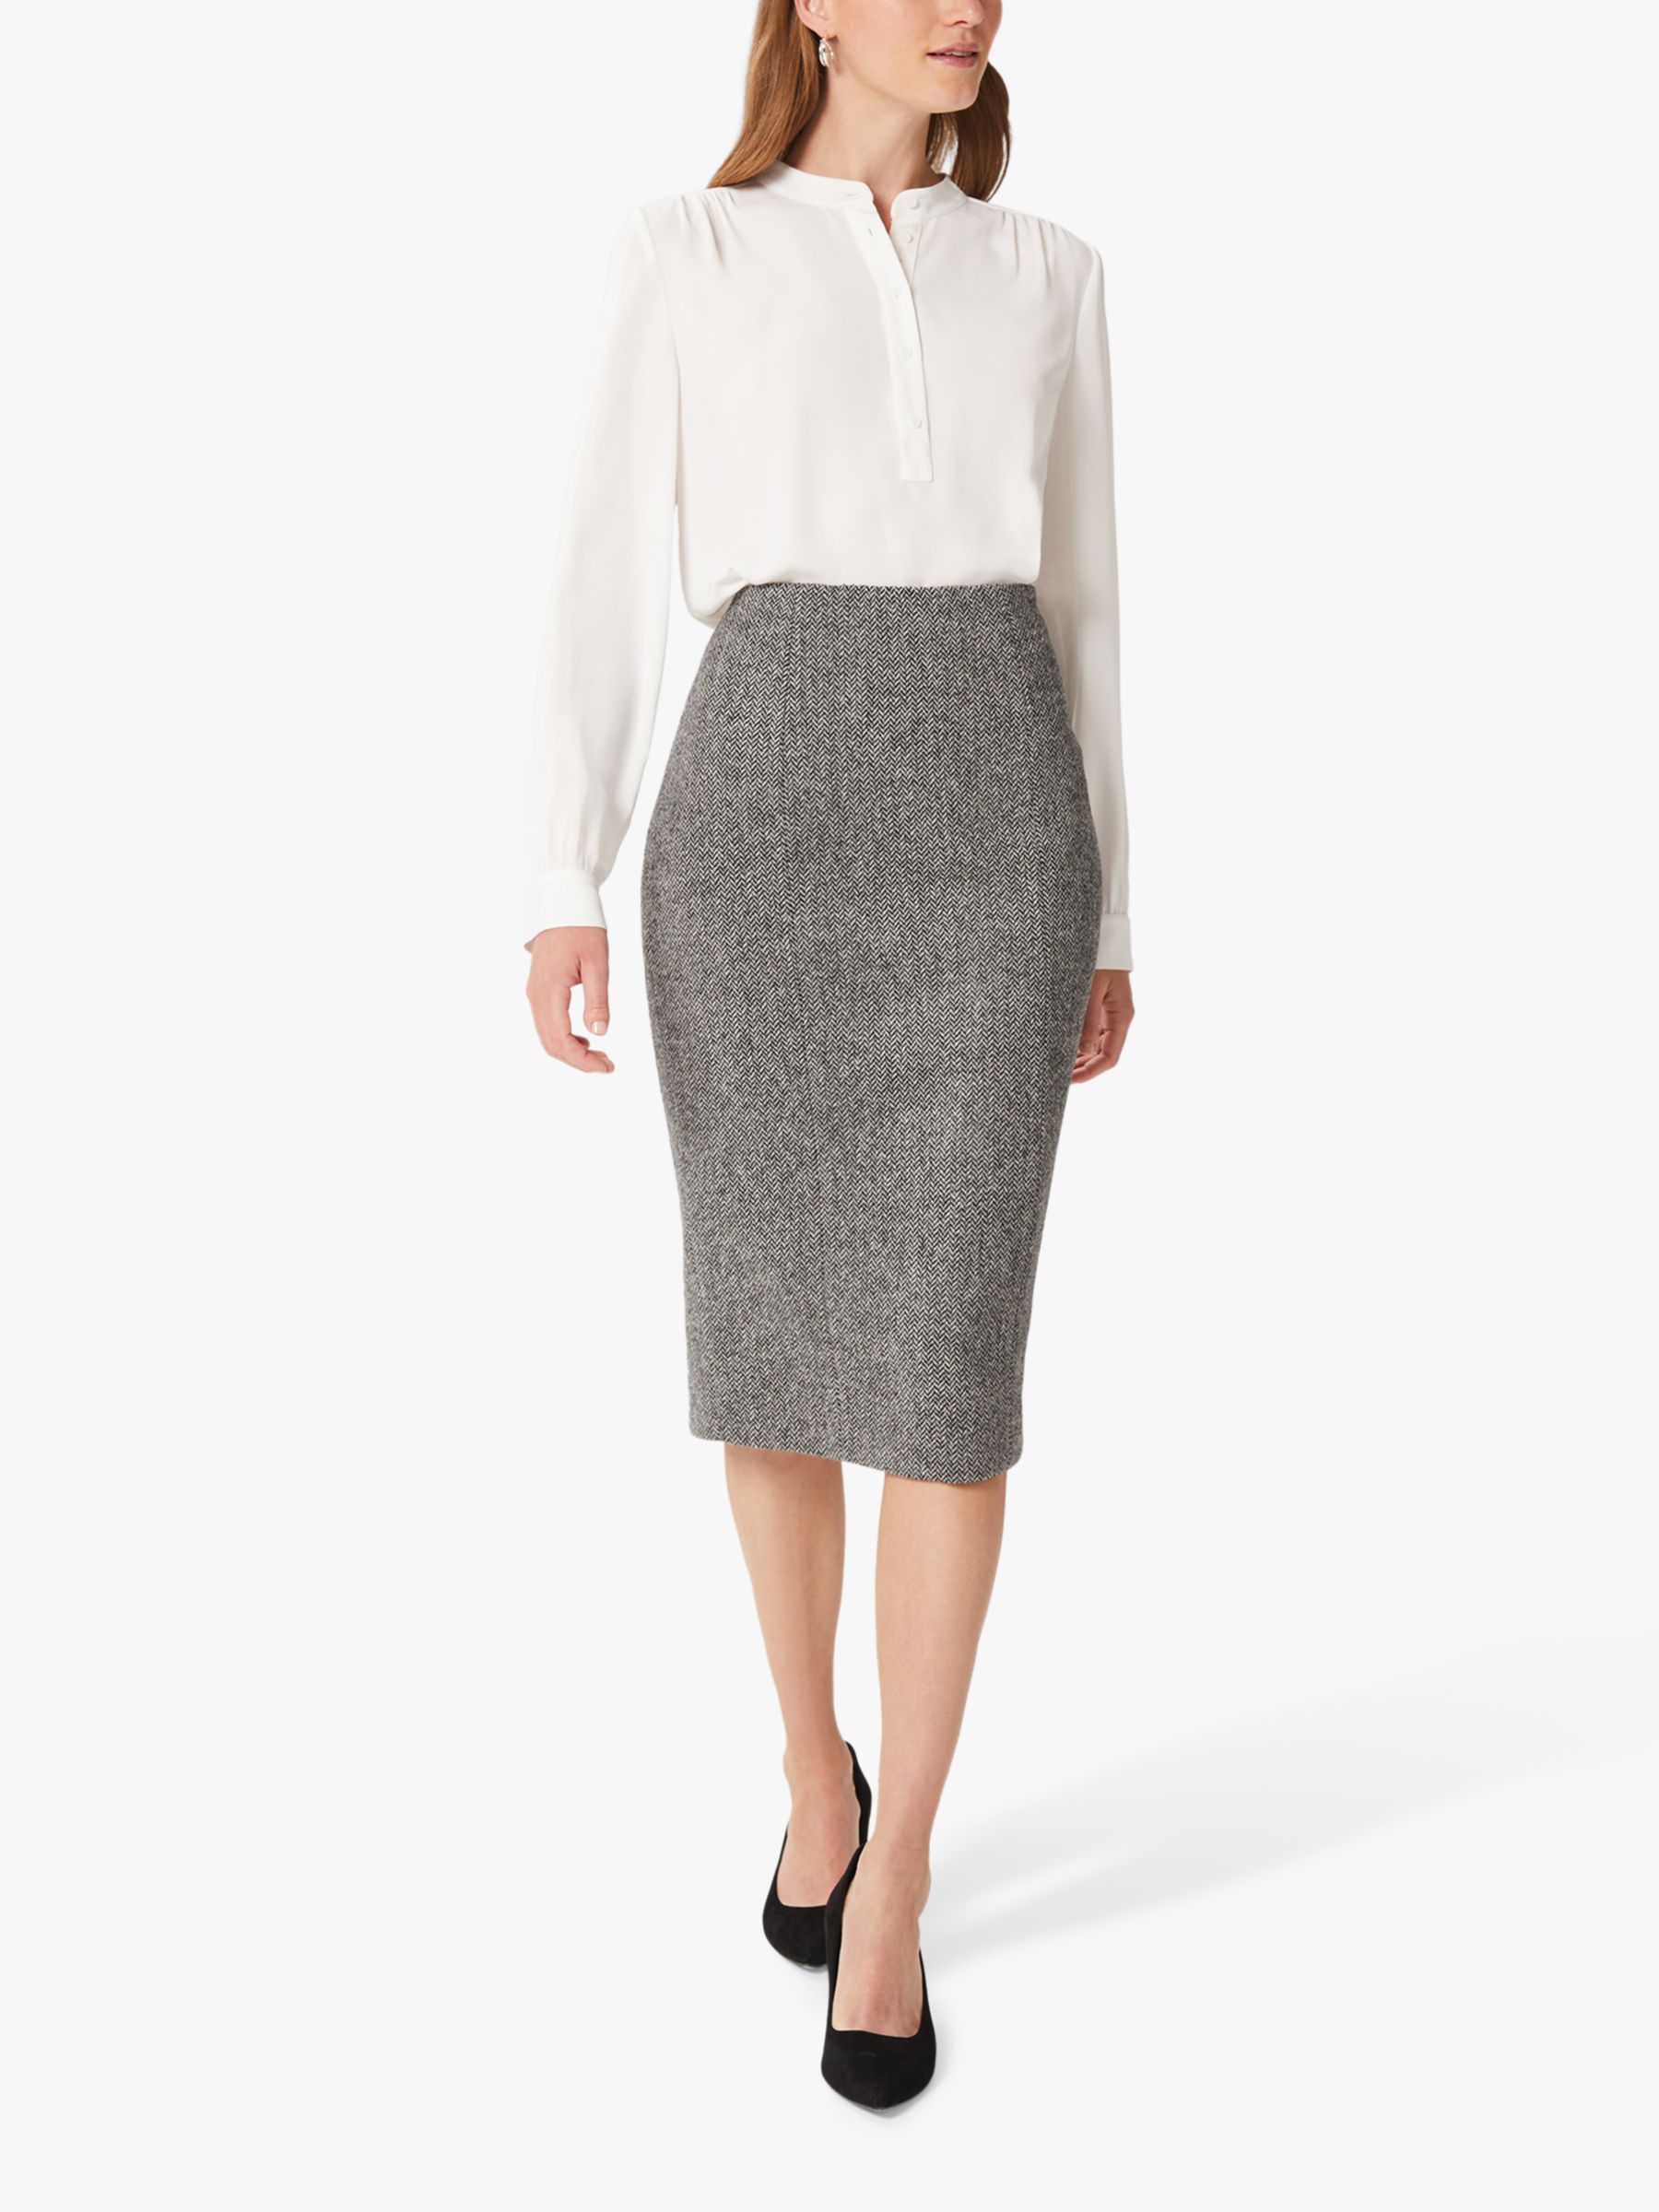 Hobbs Daniella Wool Tweed Skirt, Black/White at John Lewis & Partners